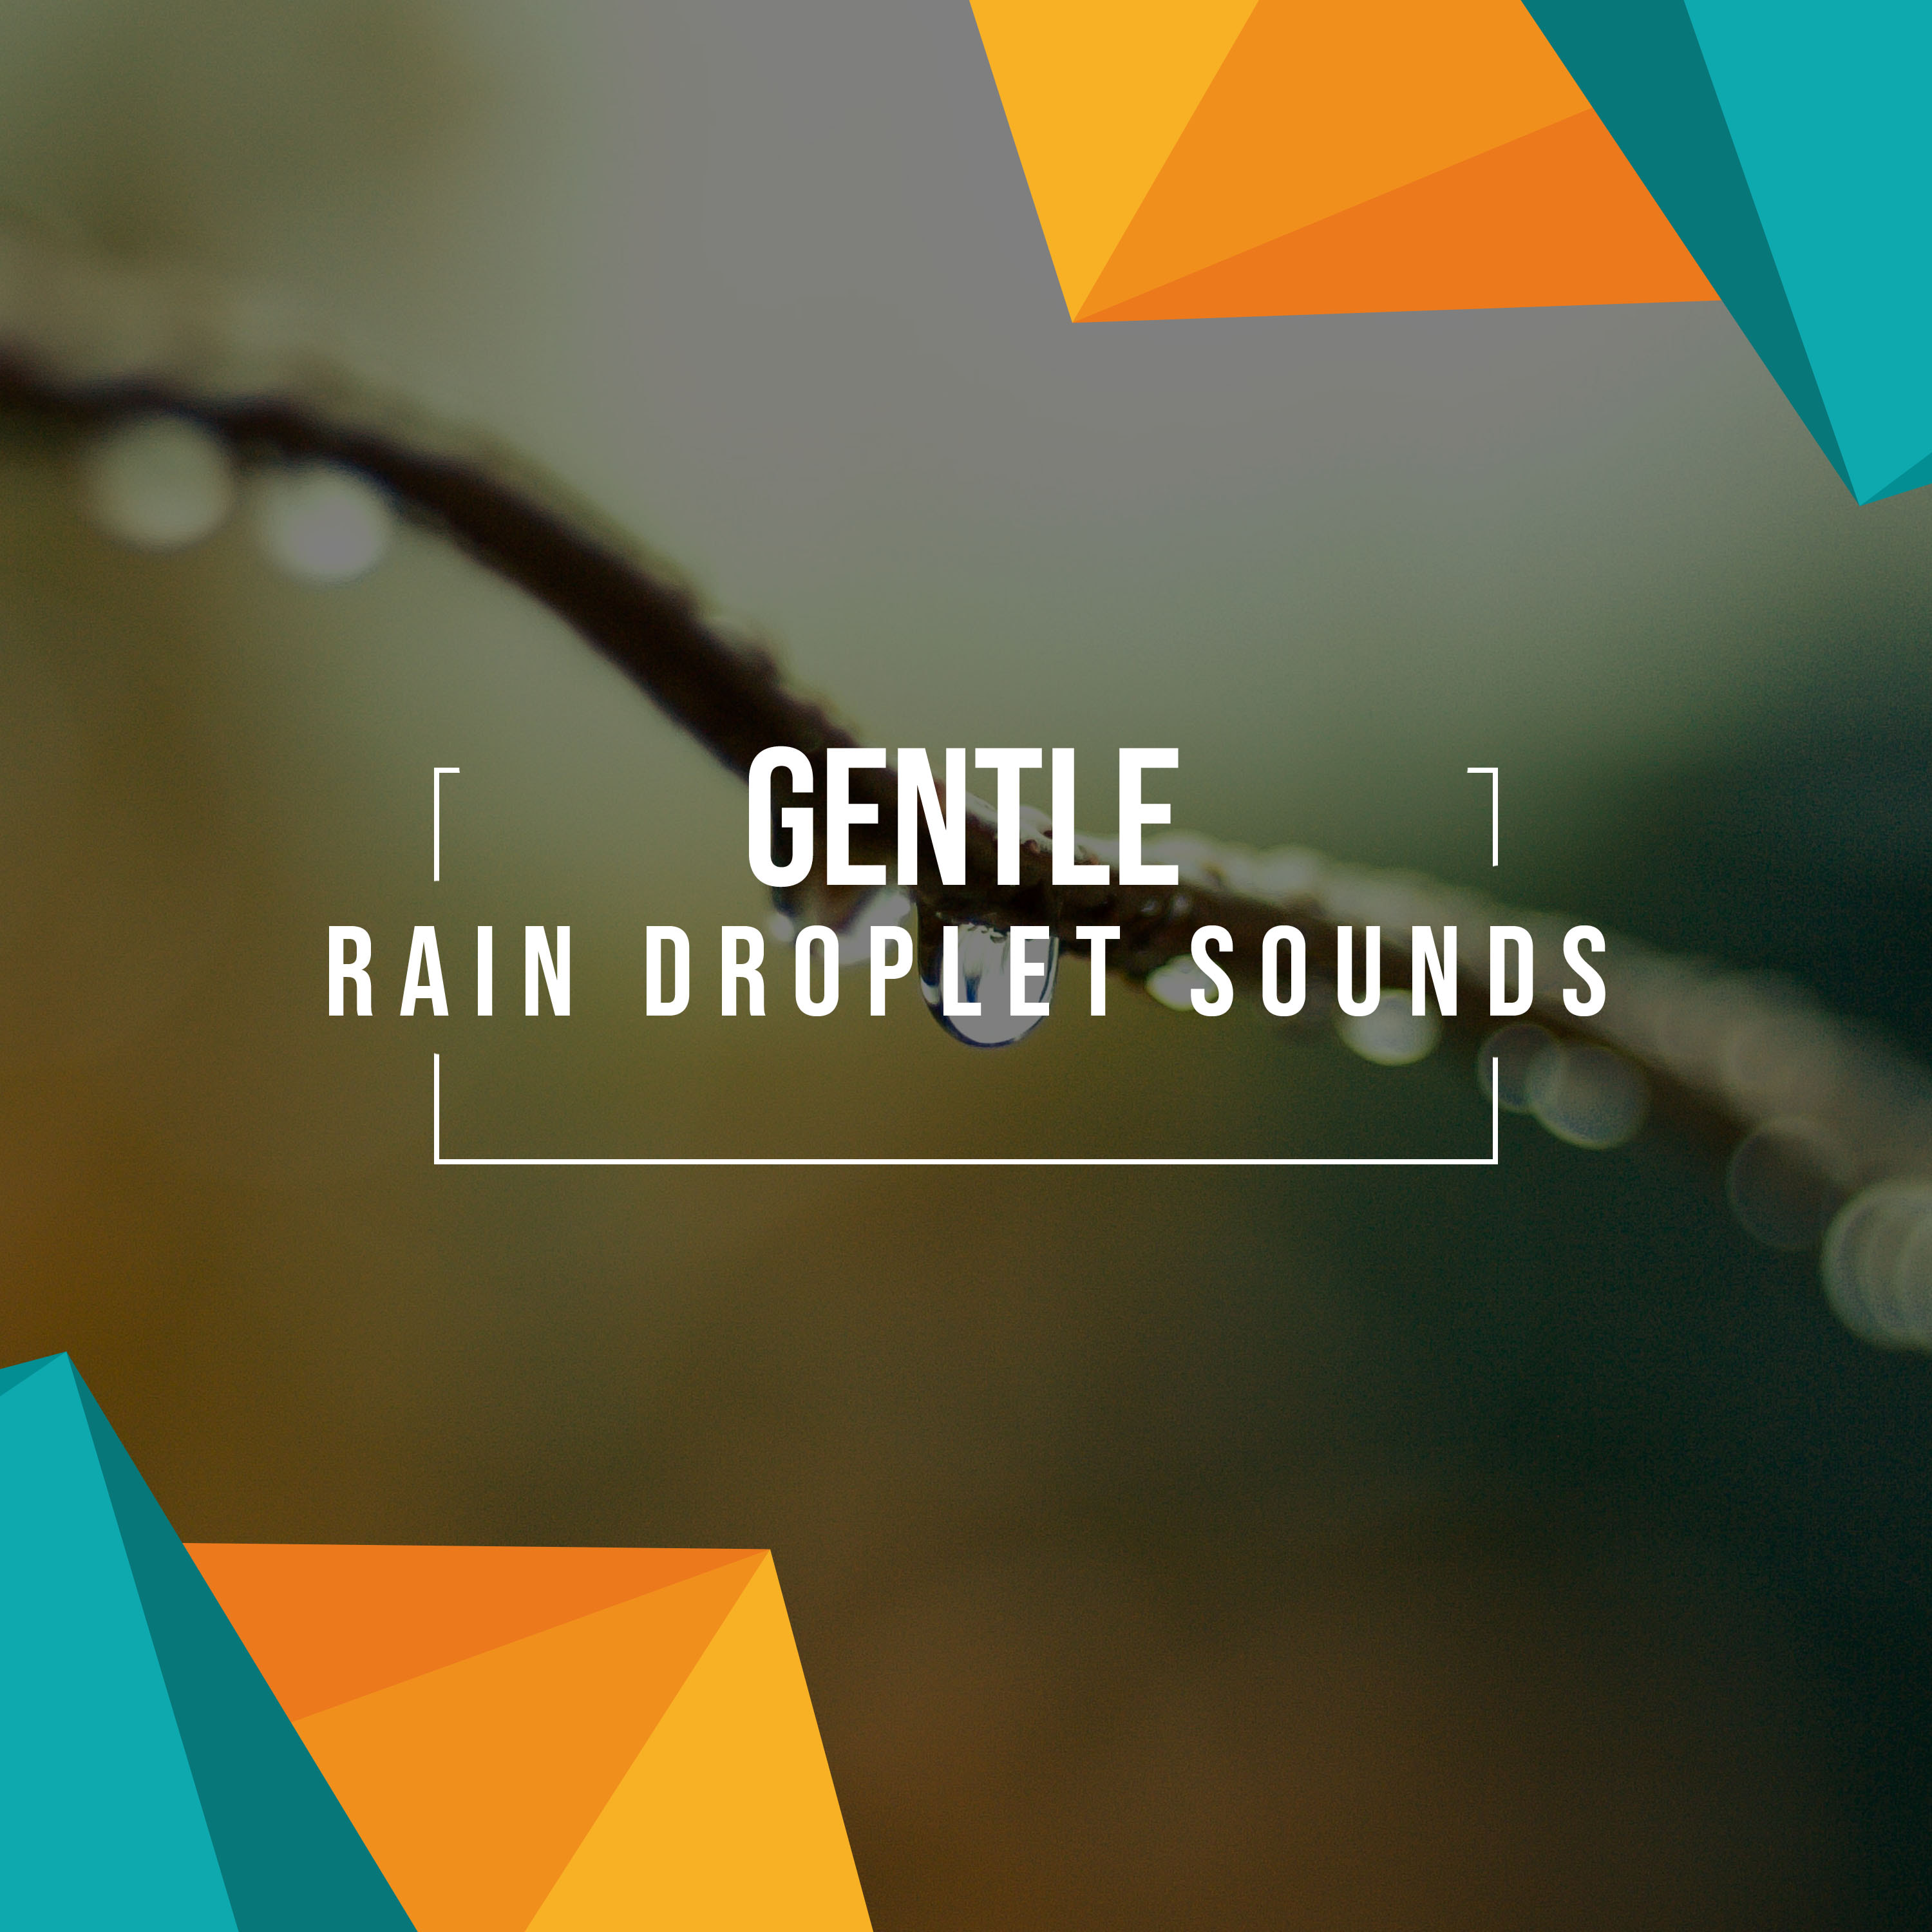 #18 Gentle Rain Droplet Sounds